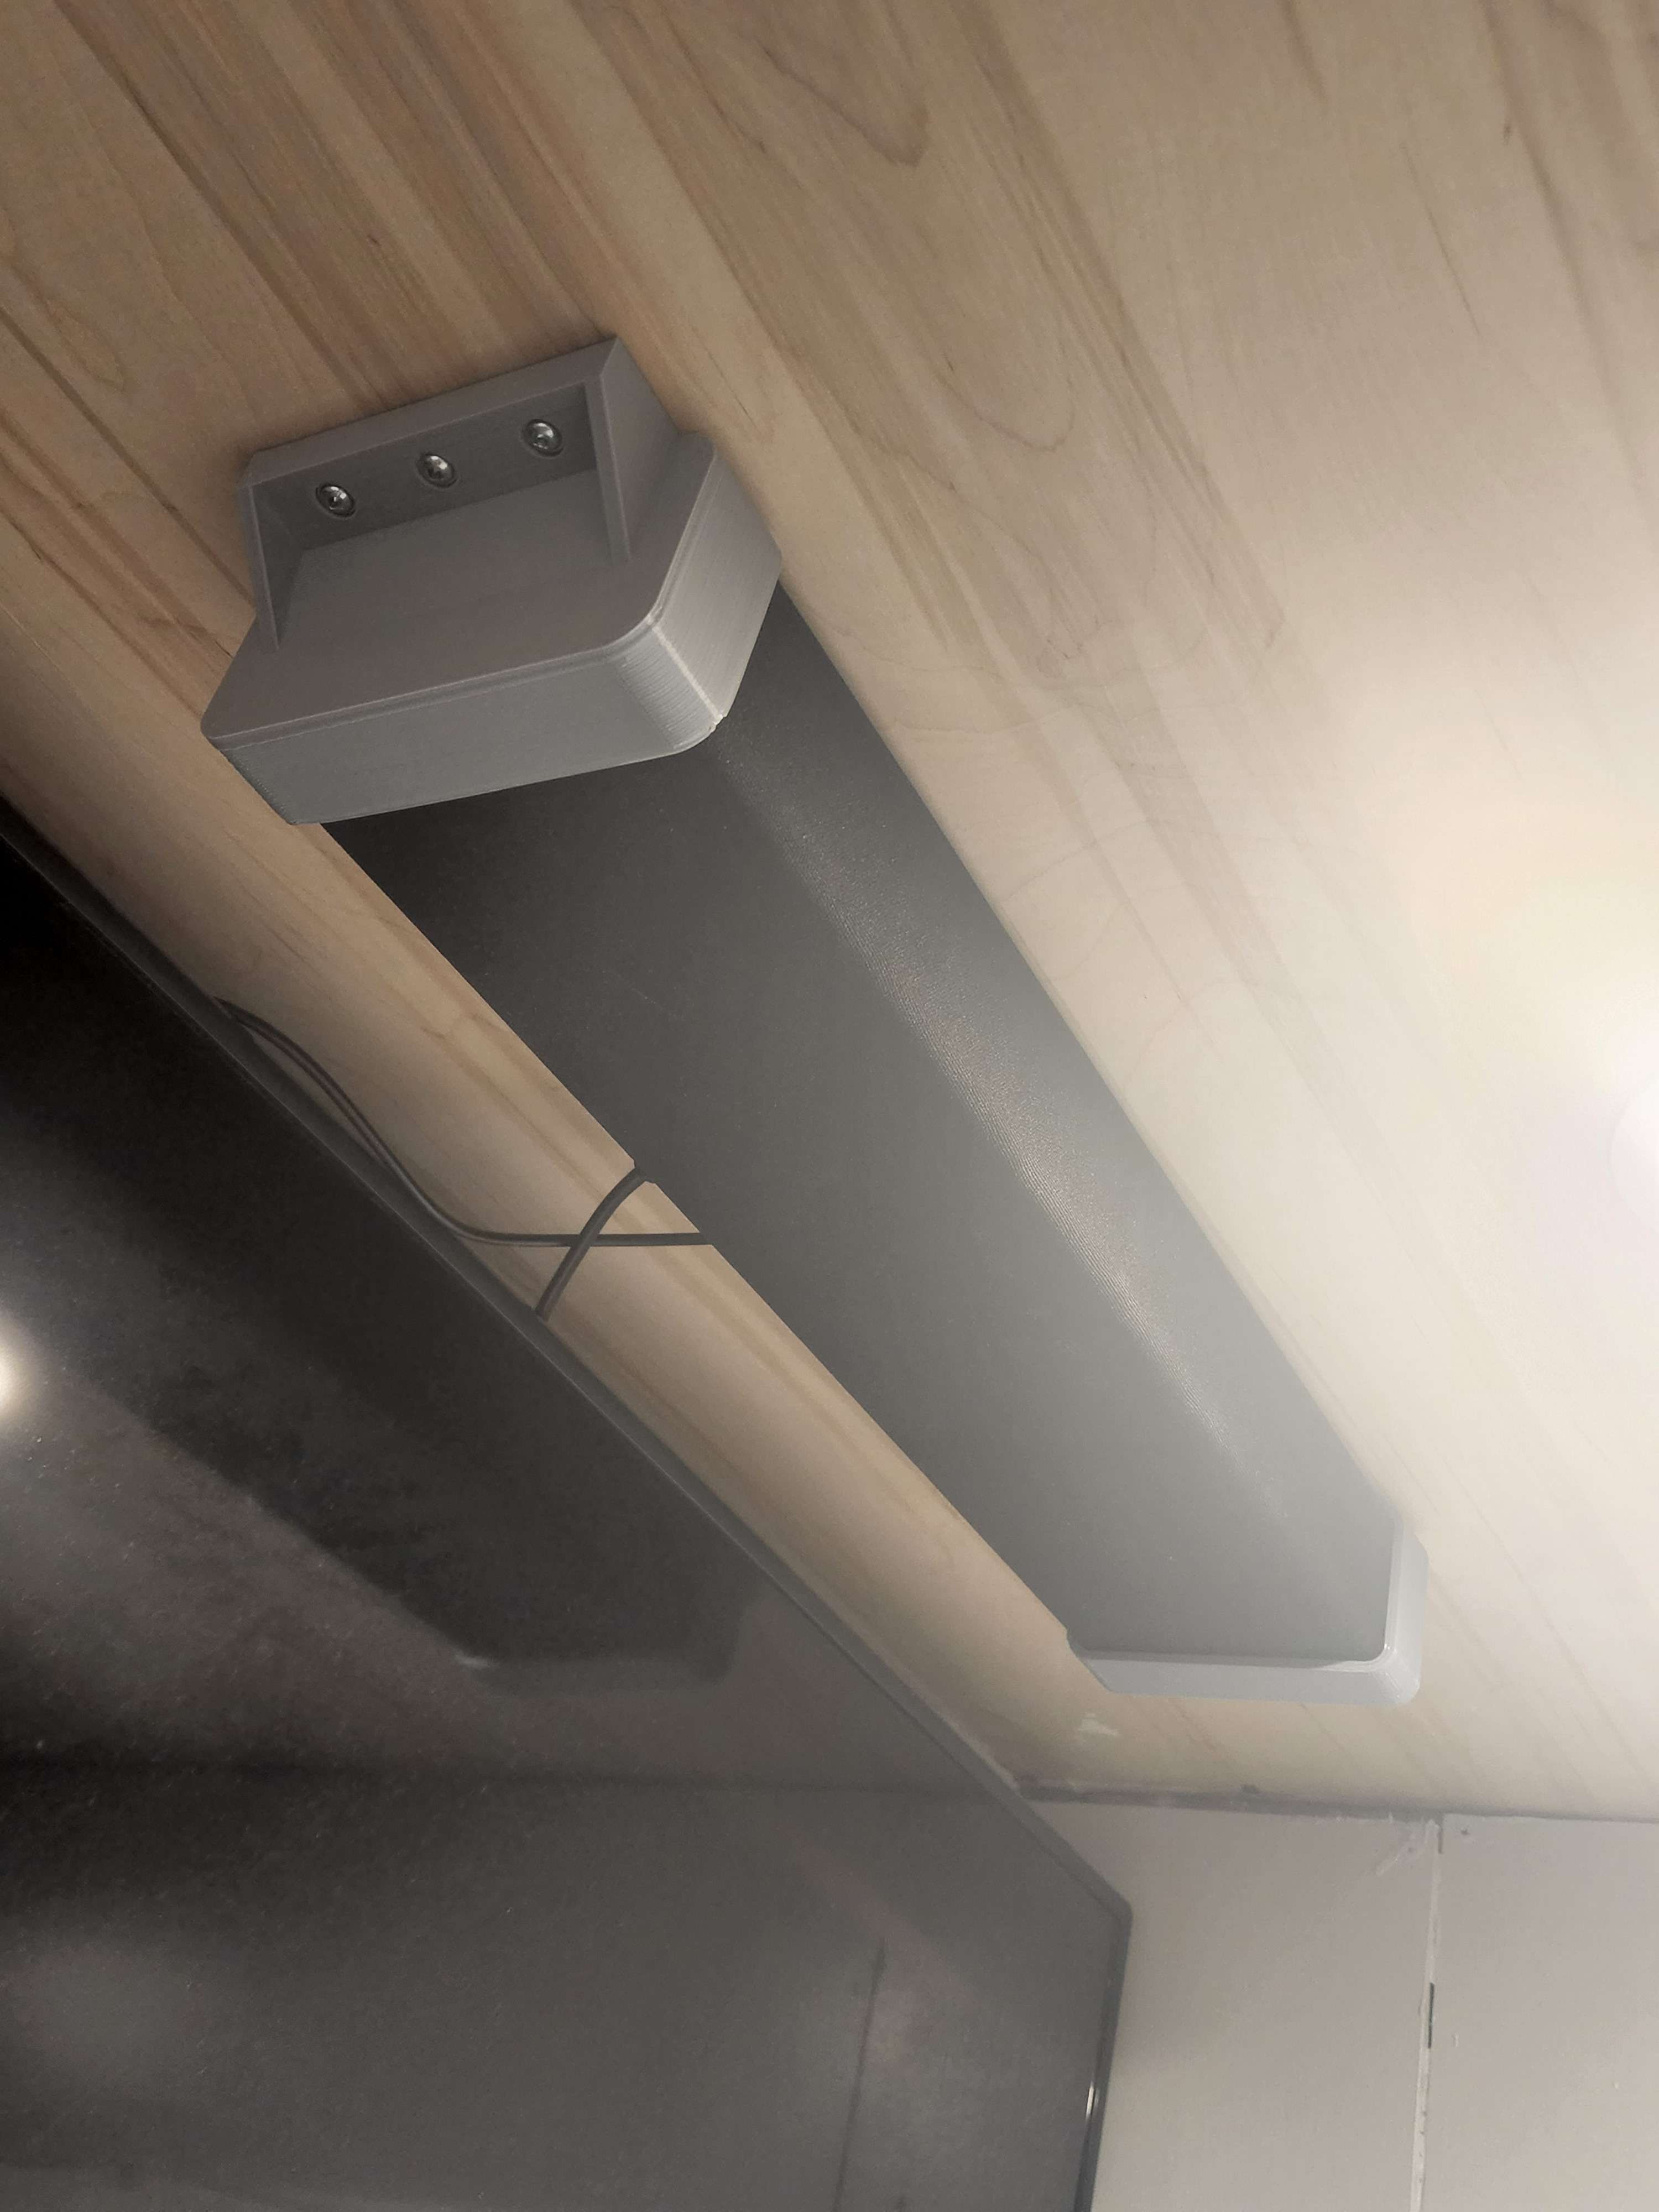 Speaker Wall or ceiling mount.